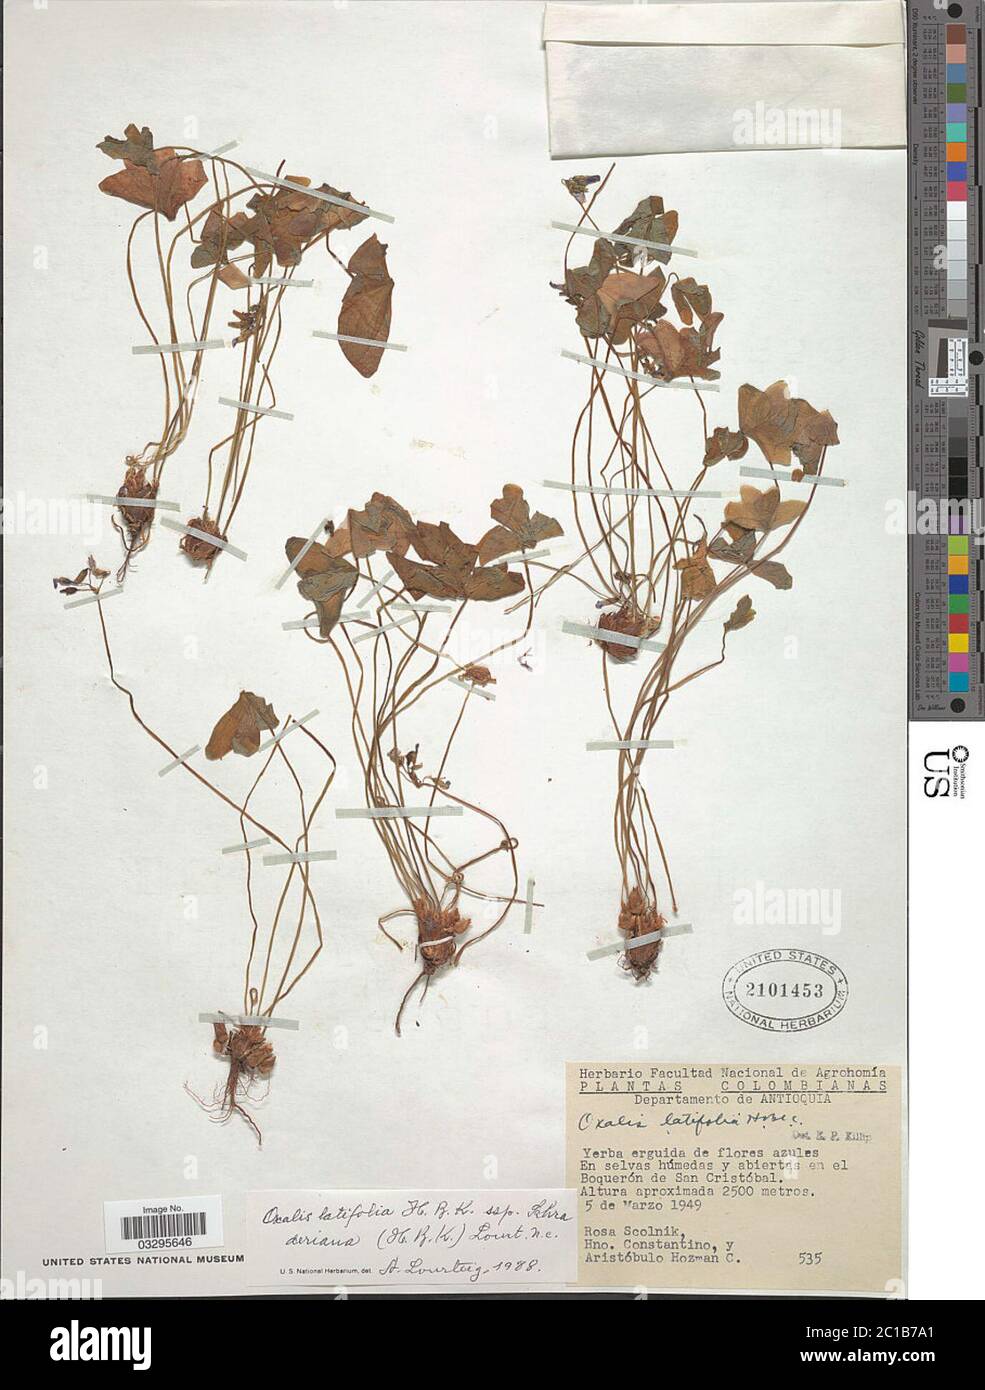 Oxalis latifolia subsp schraderiana Kunth Lourteig Oxalis latifolia subsp schraderiana Kunth Lourteig. Stock Photo